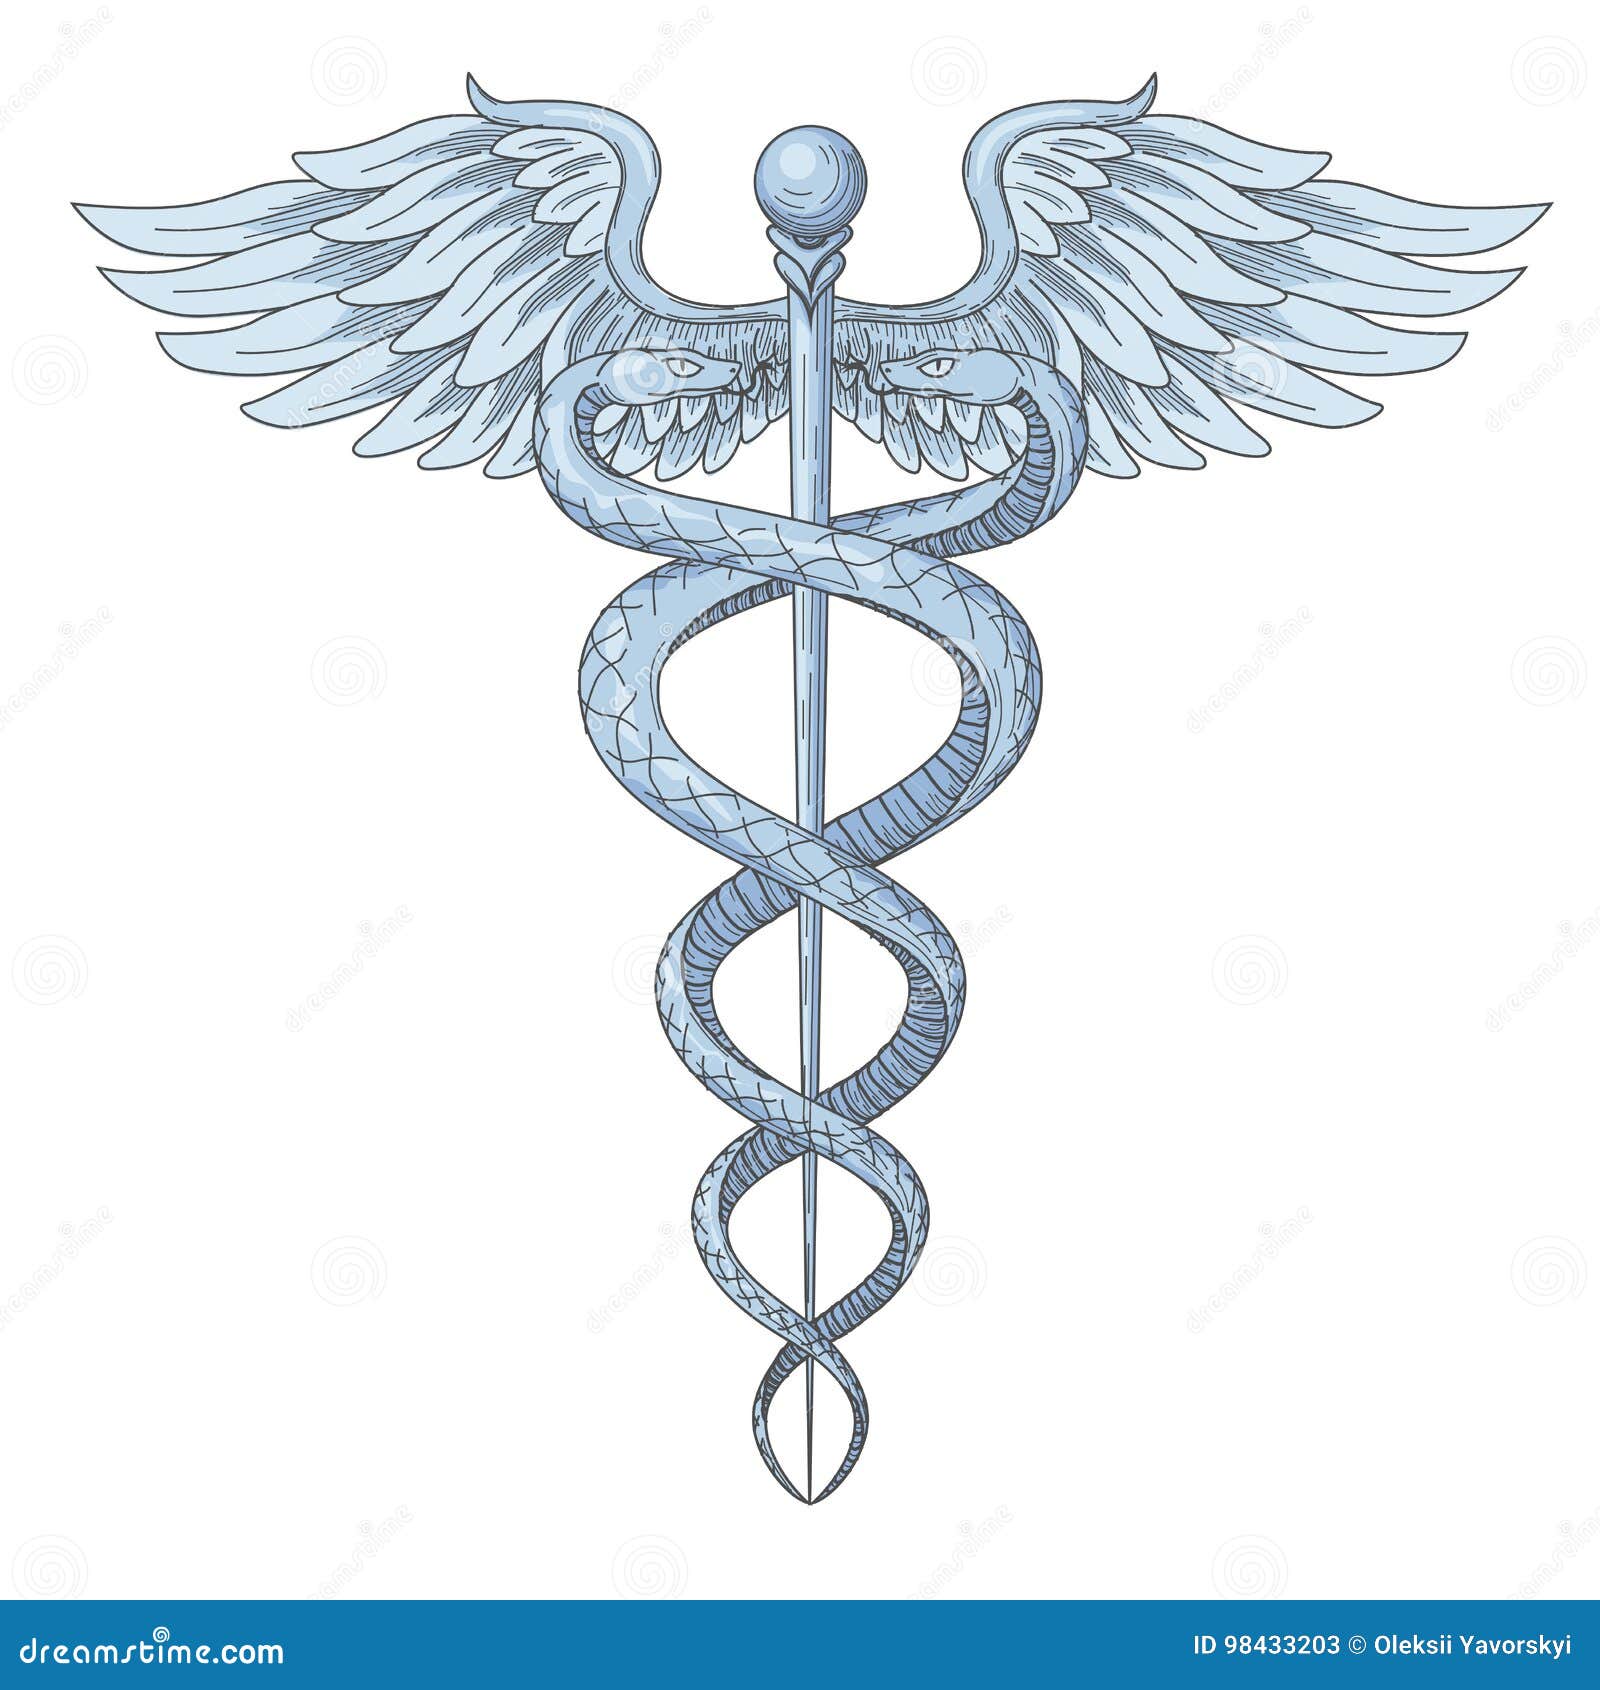 100,000 Medical symbol drawing Vector Images | Depositphotos